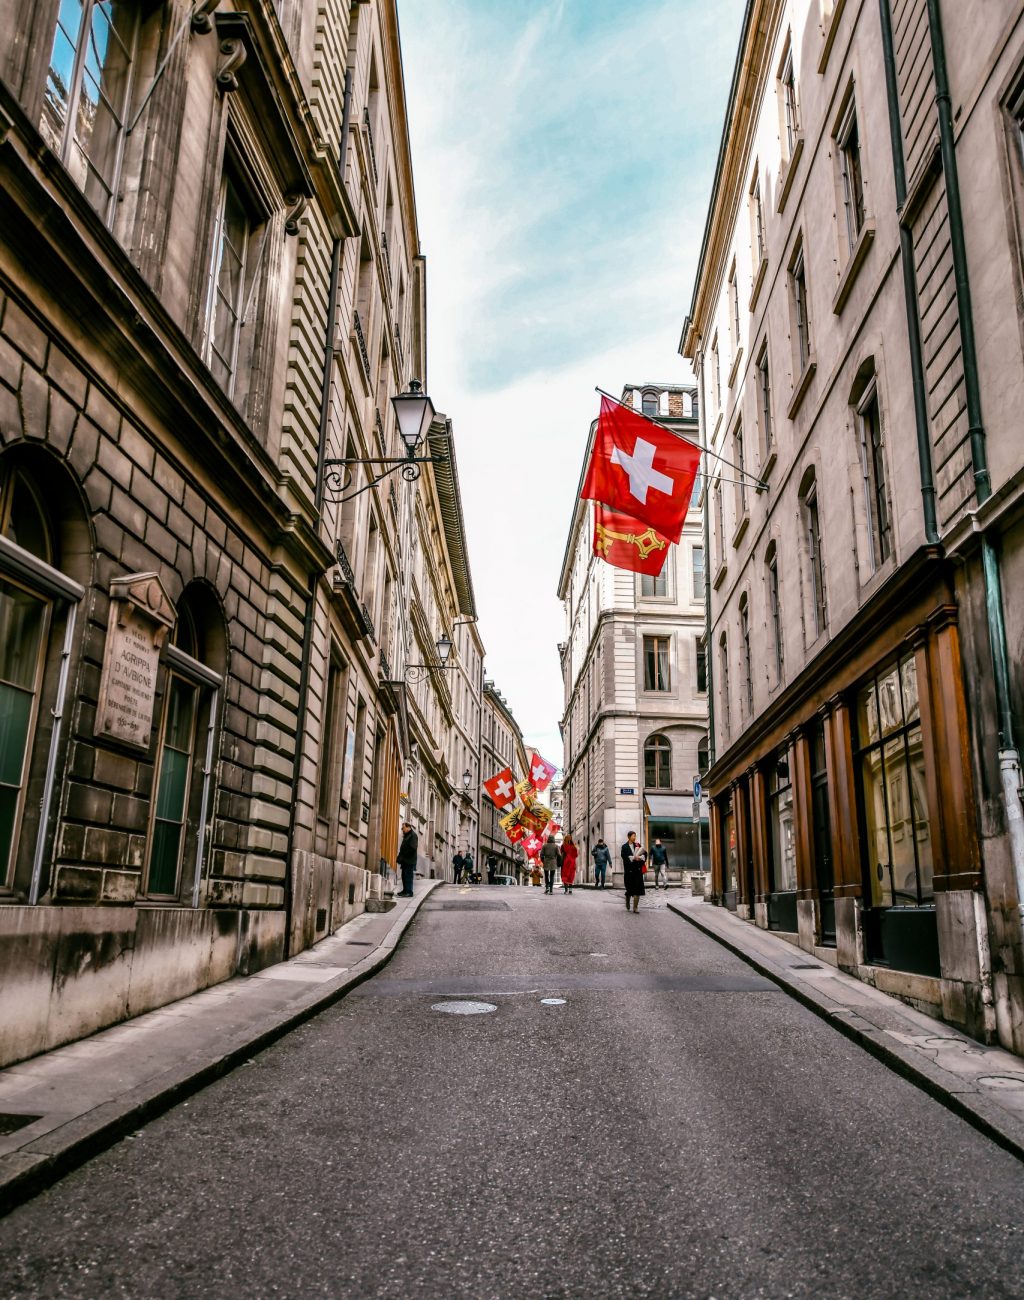 Beautiful Idyllic Street With Architecture And Flags In Geneva, Switzerland